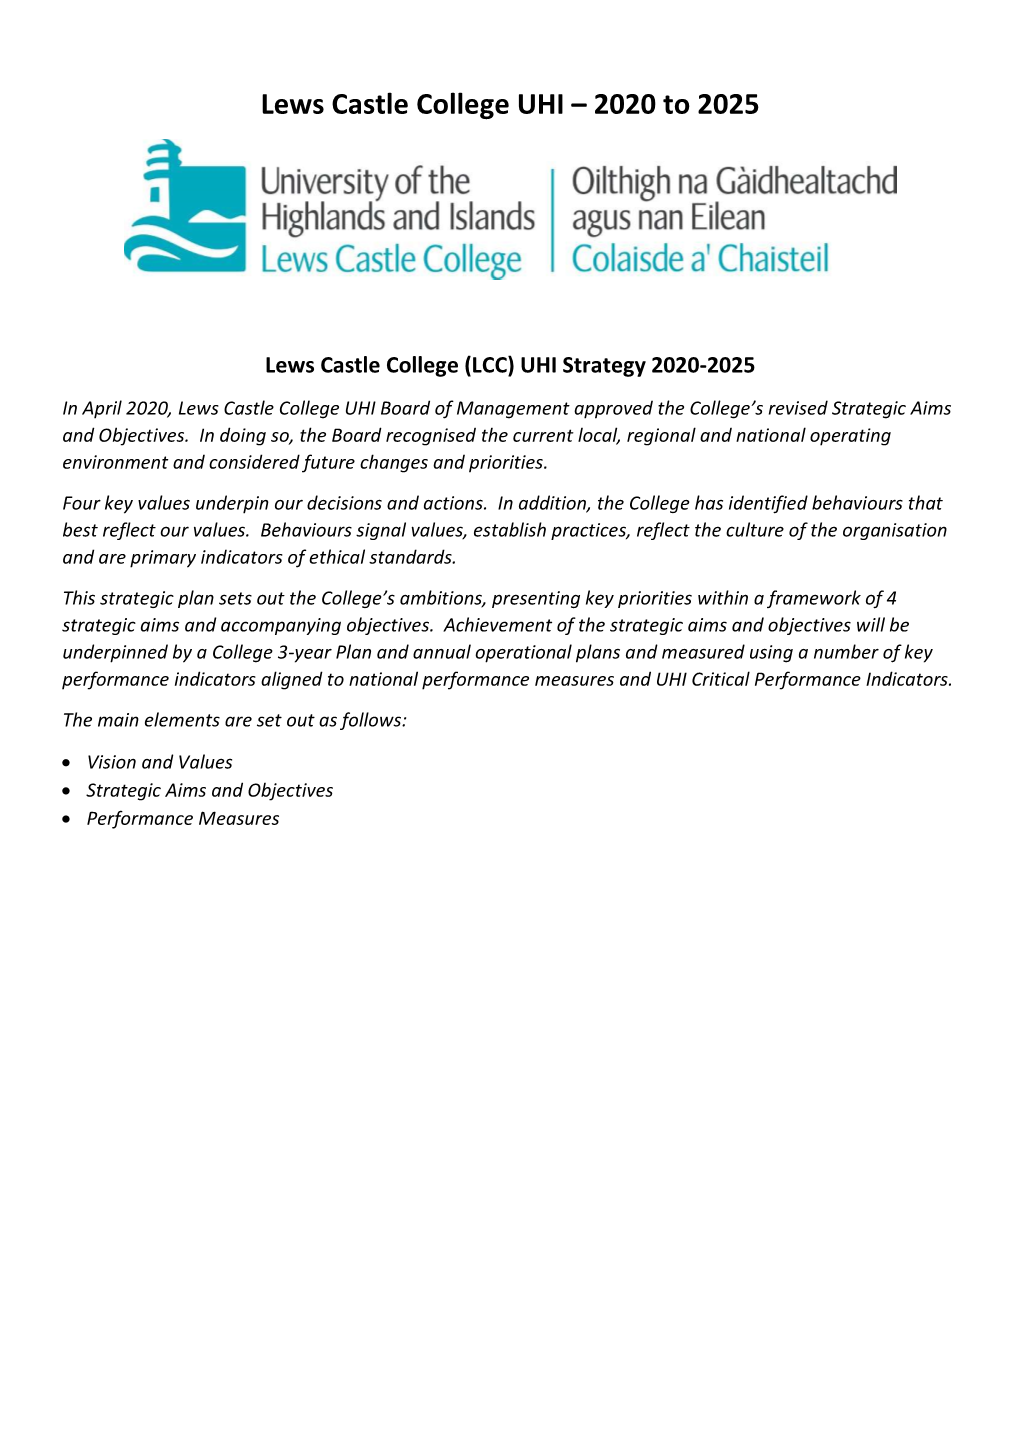 Lews Castle College (LCC) UHI Strategy 2020-2025